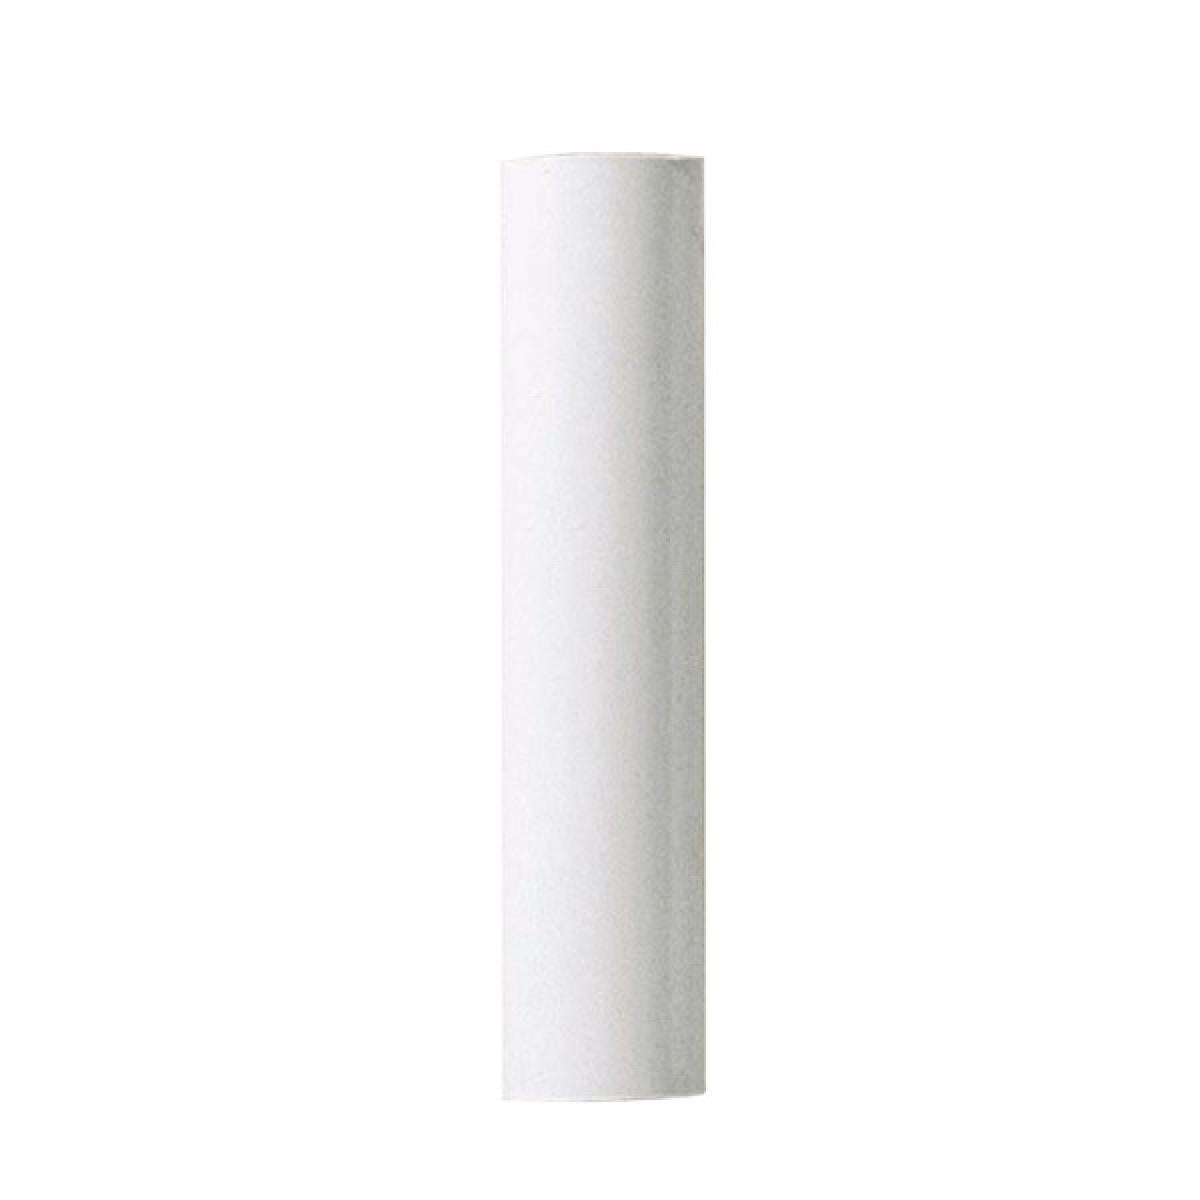 Satco 90-913 Plastic Candle Cover White Plastic 1-3/16" Inside Diameter 1-1/4" Outside Diameter 2-1/8" Height